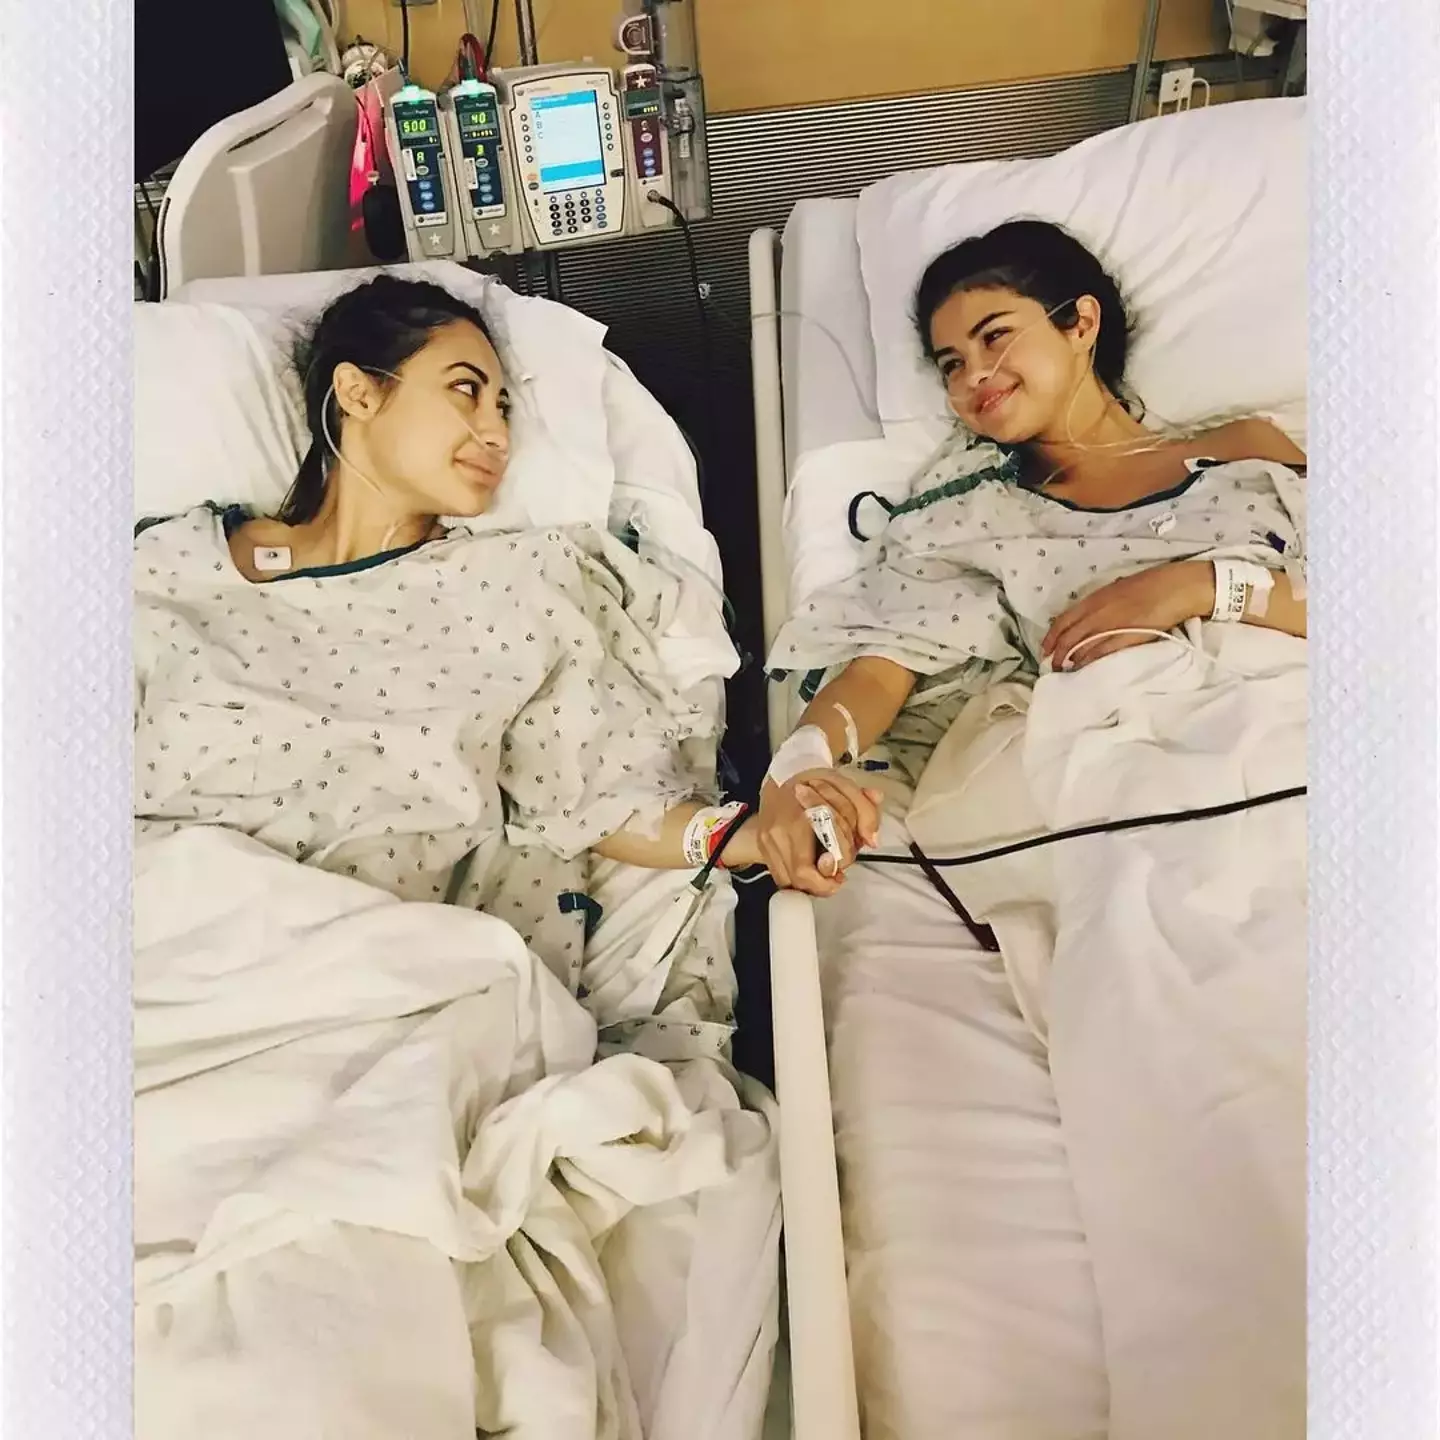 Francia Raisa donated a kidney to Selena Gomez in 2017.